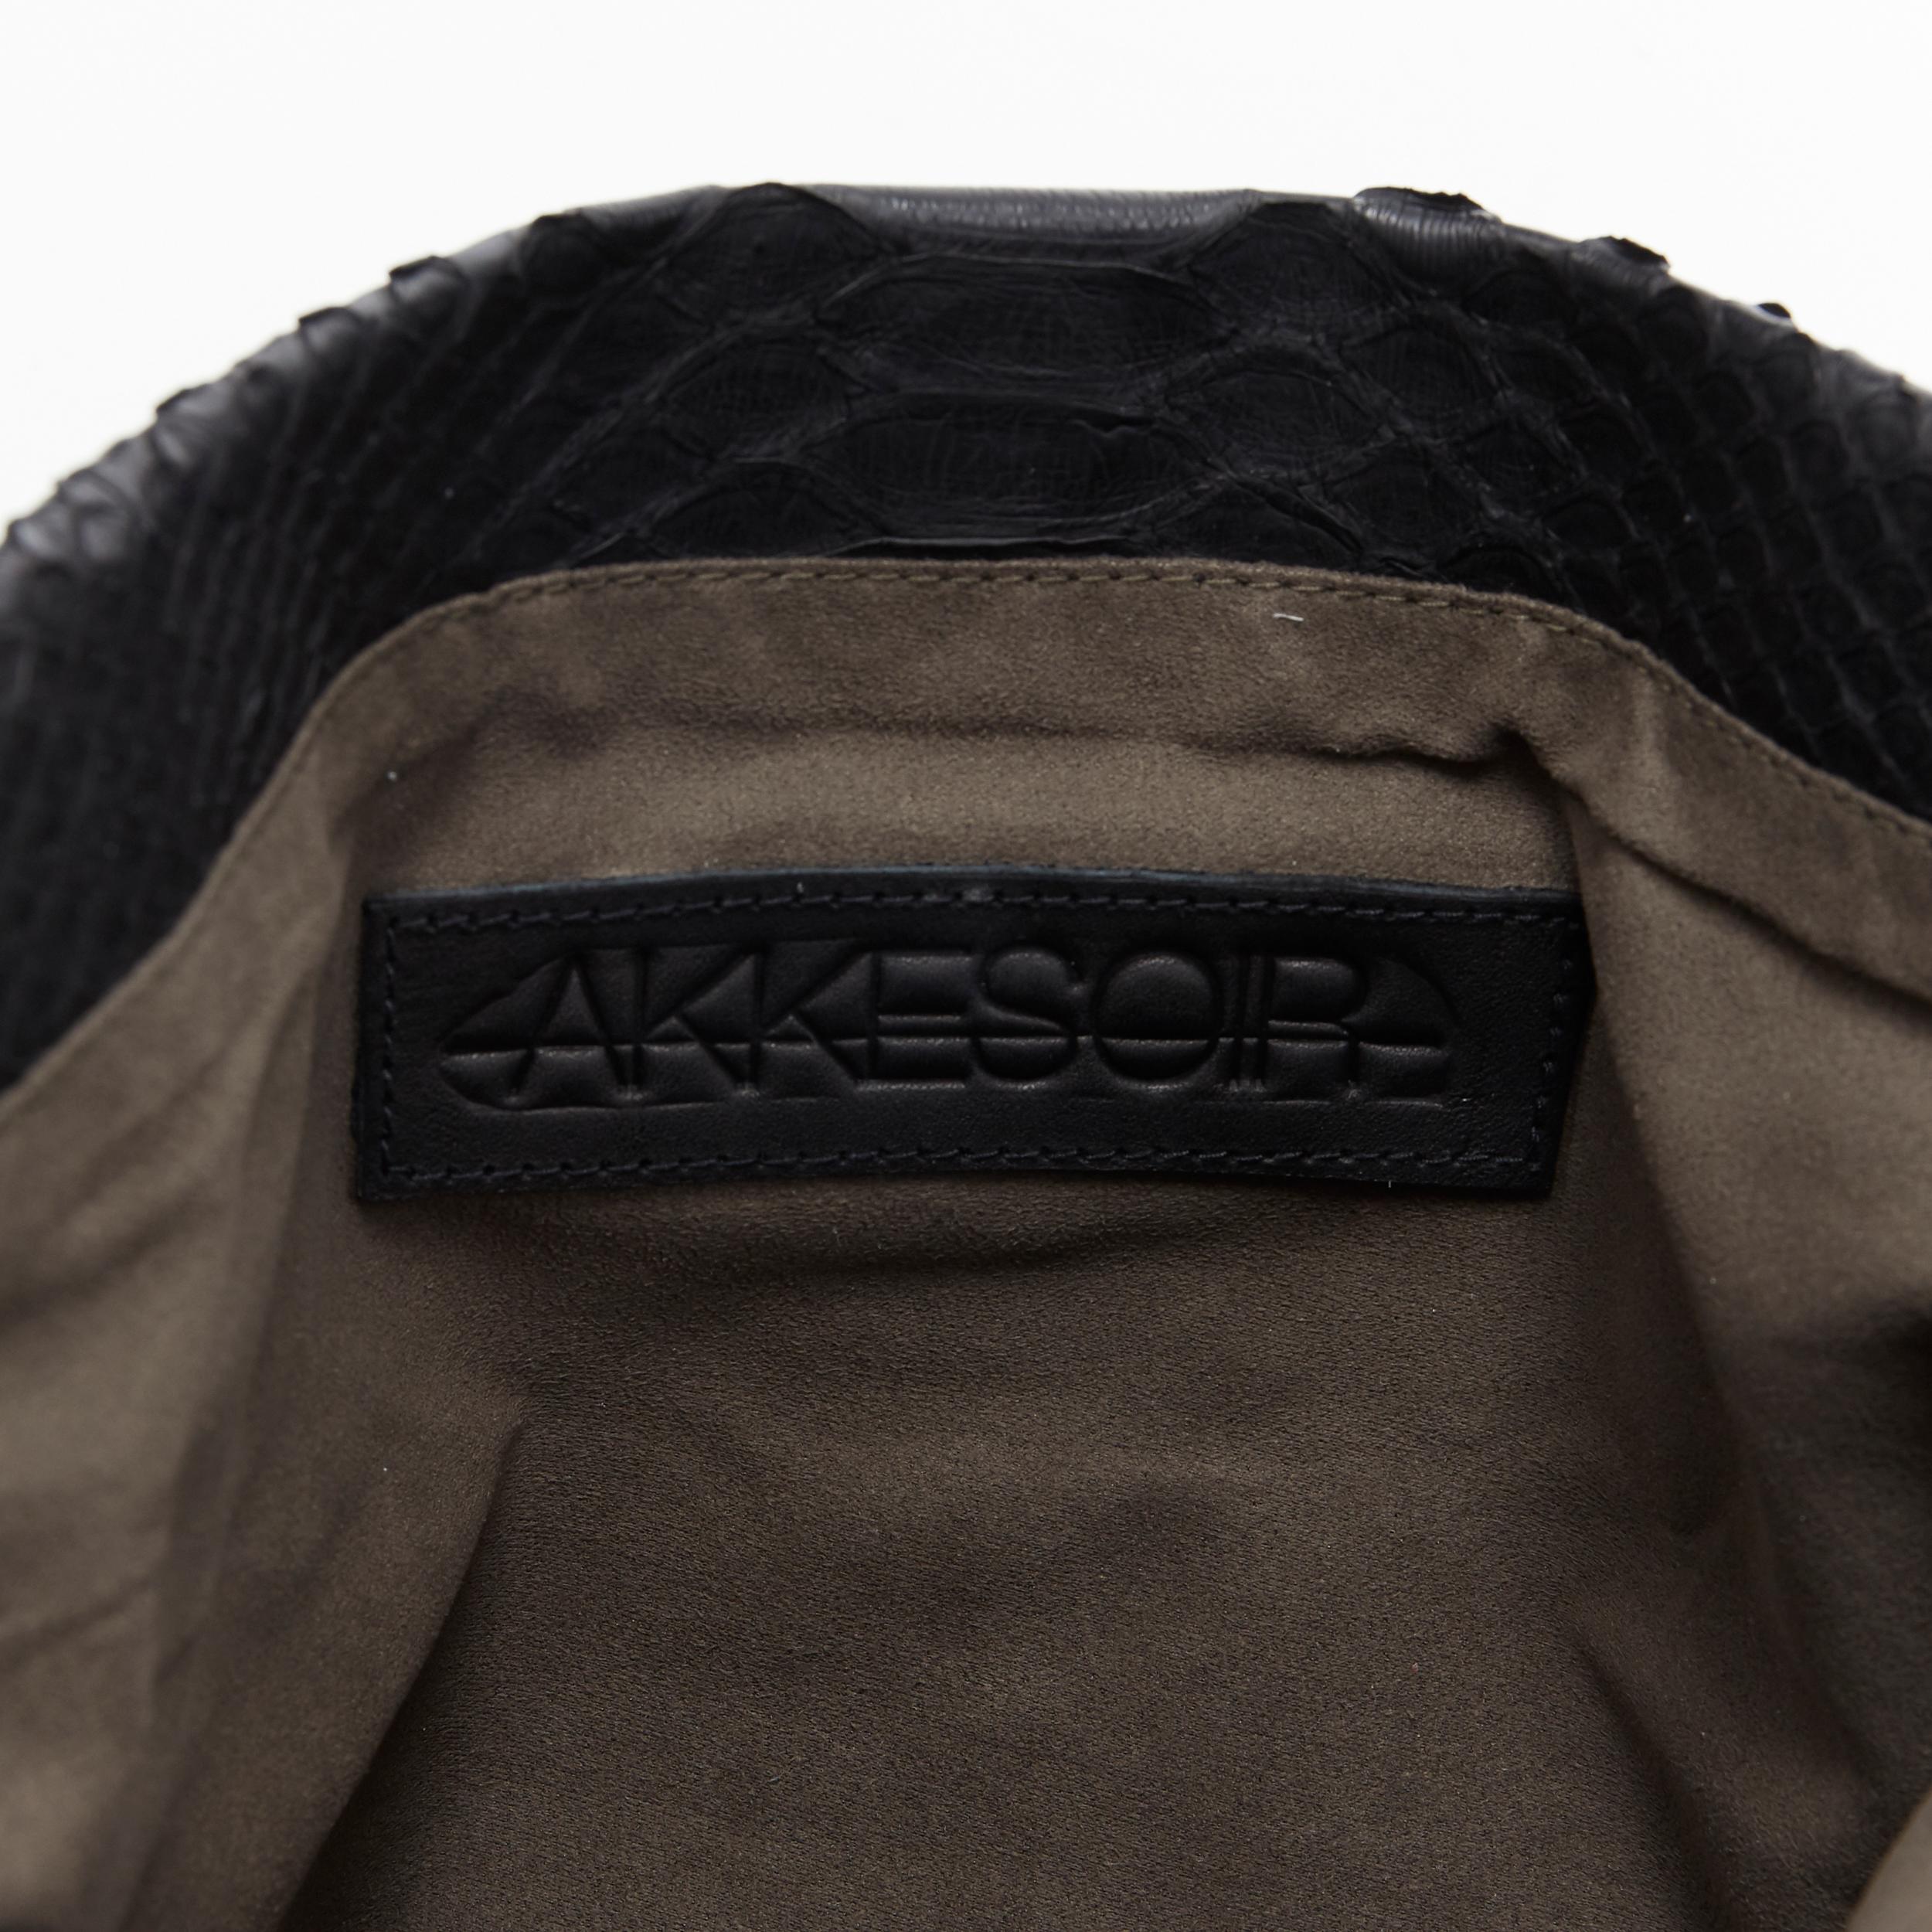 AKKESOIR black genuine scaled leather foldover rectangular clutch bag 4